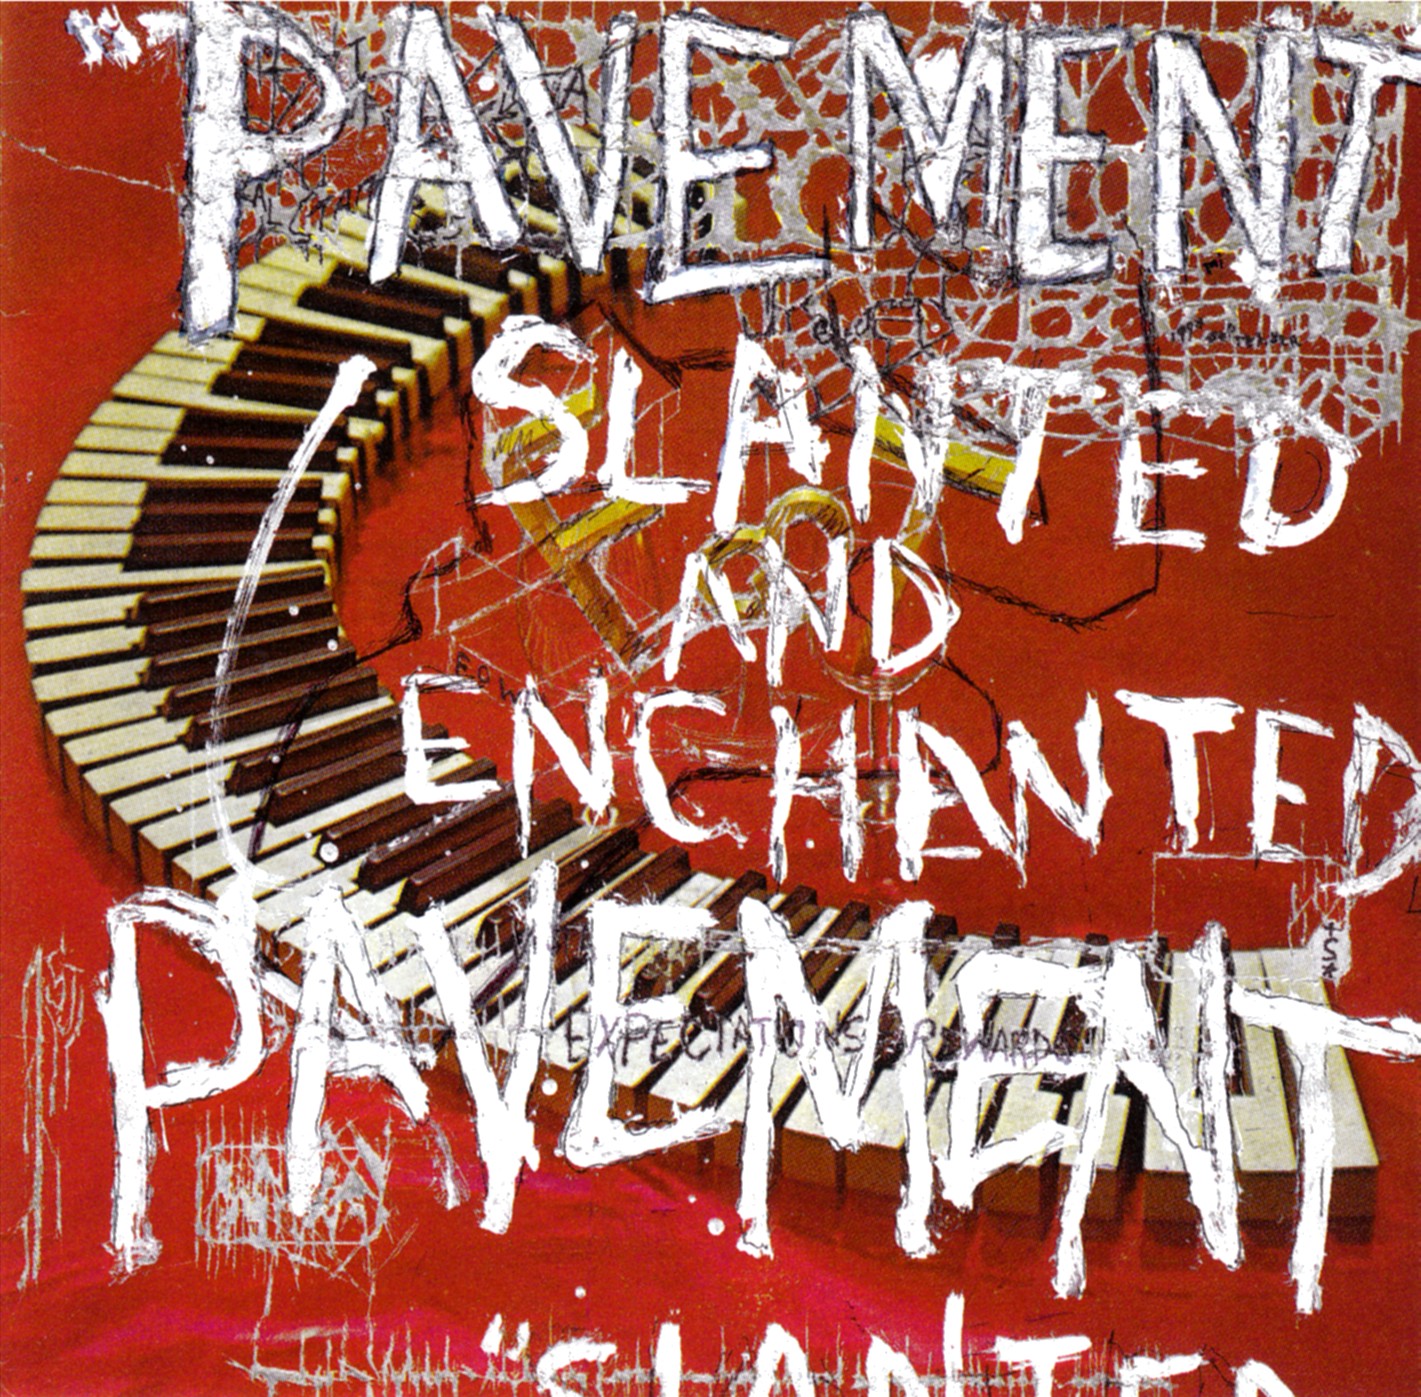 Pavement_-_Slanted___Enchanted_1335132041